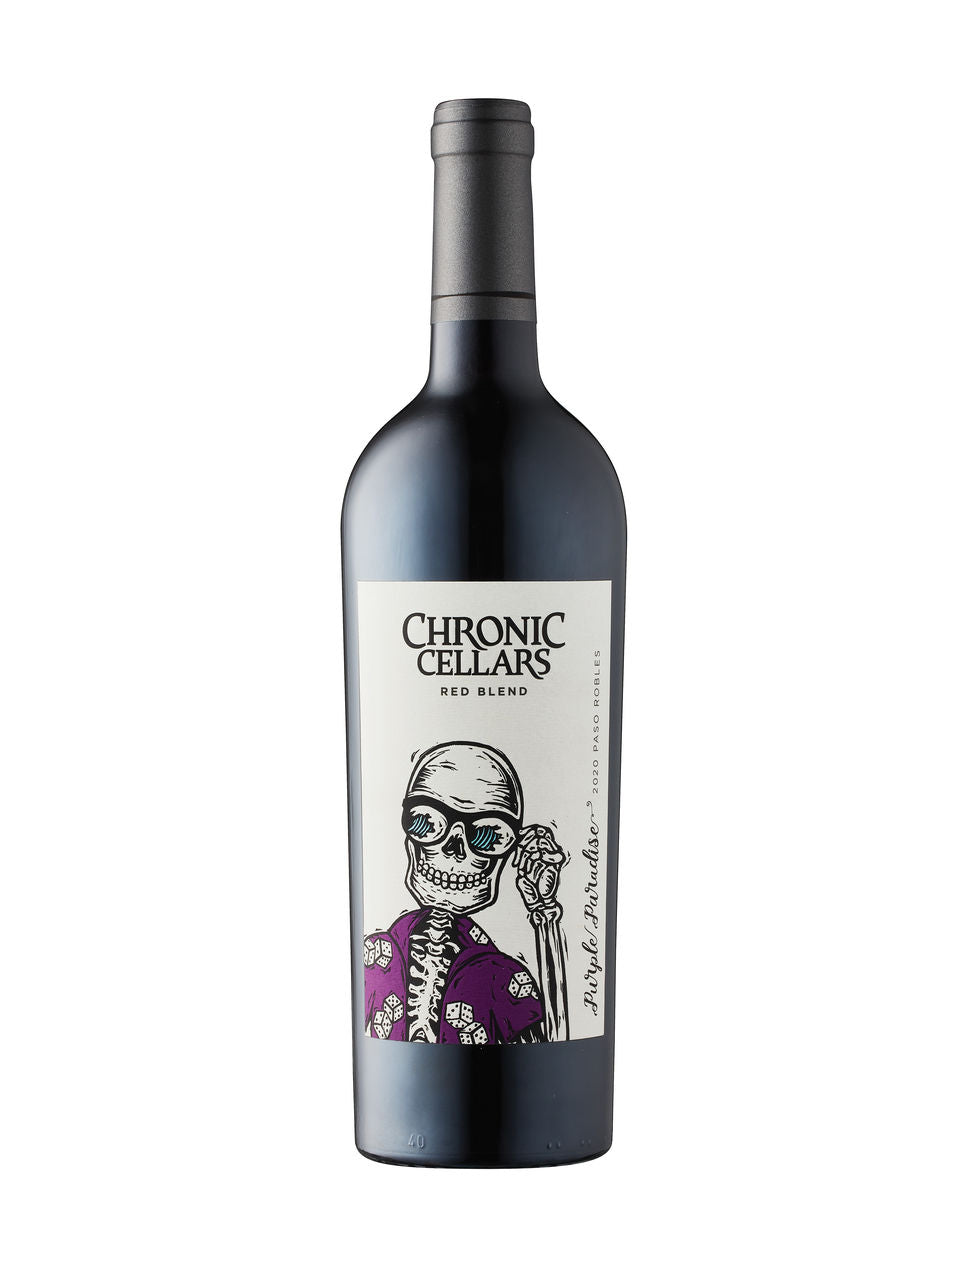 Chronic Cellars Purple Paradise Red Blend 2020 vintages